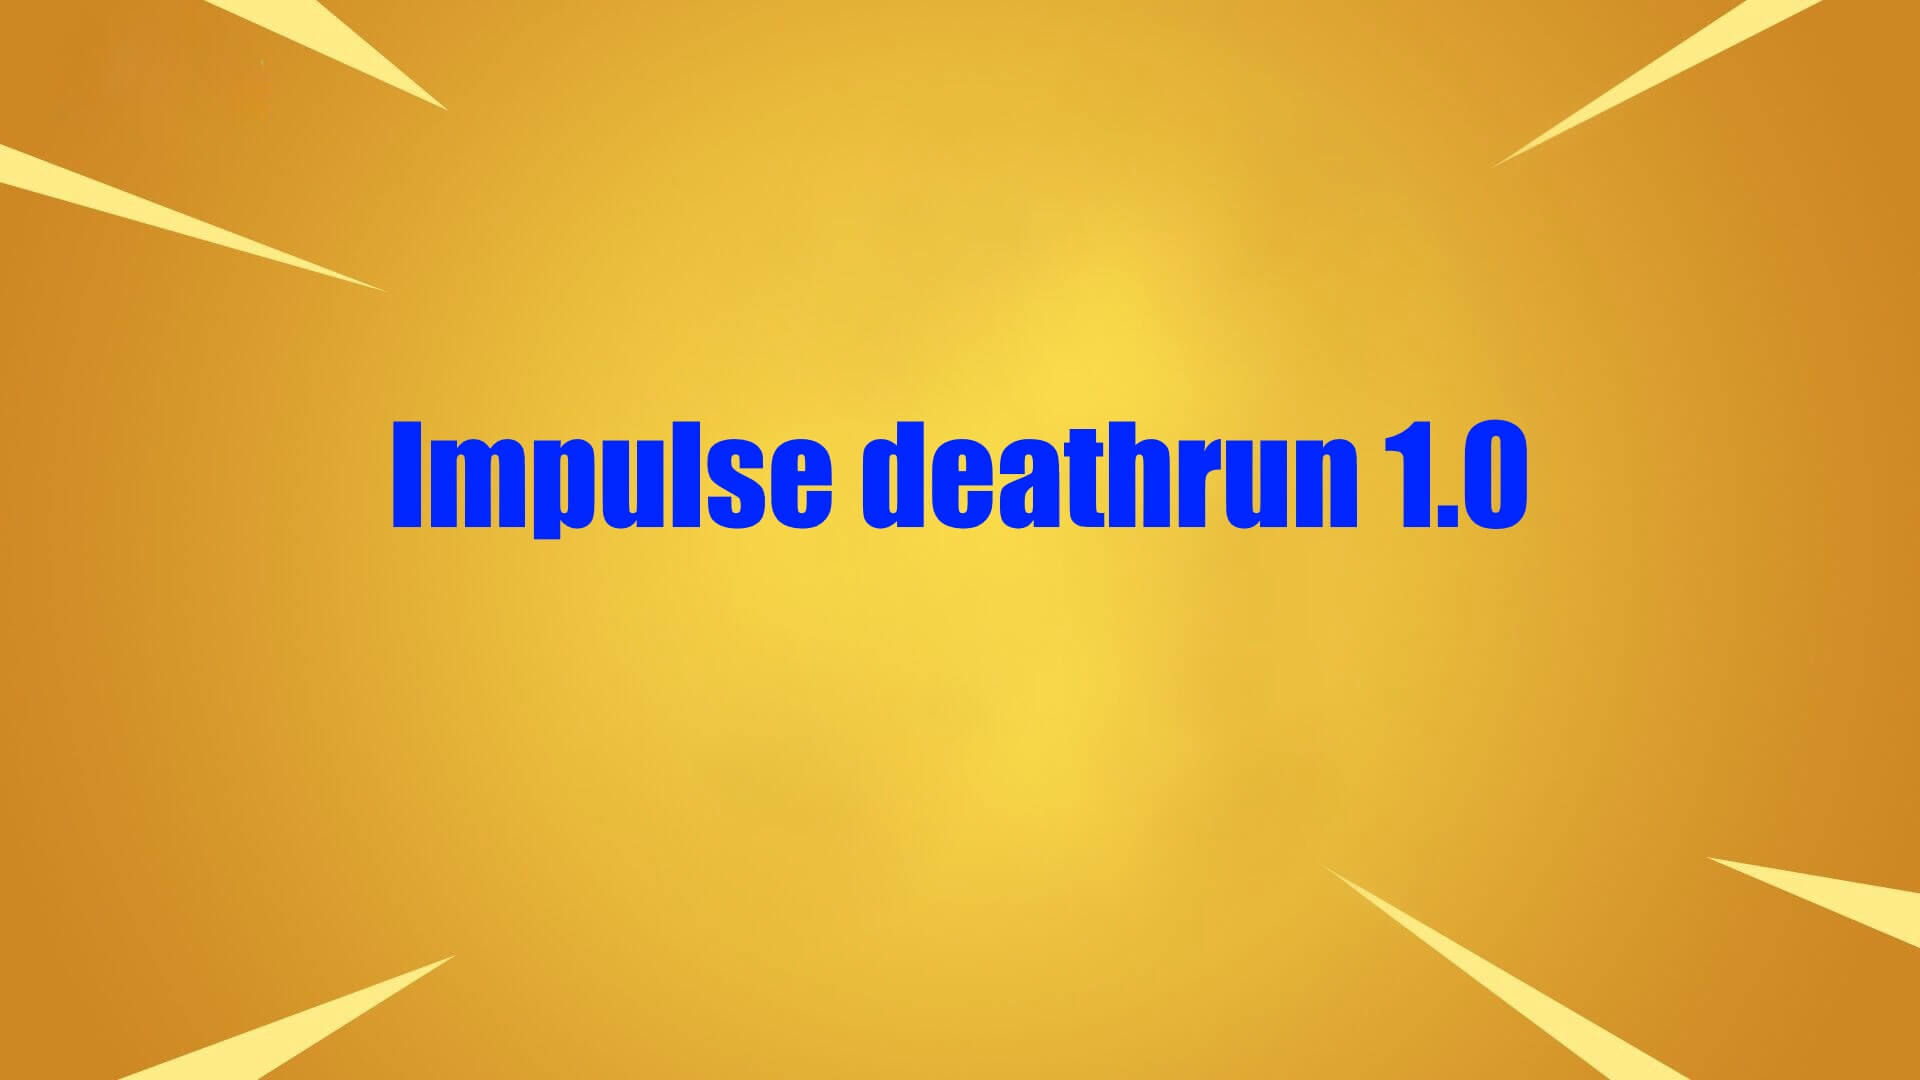 IMPULSE DEATHRUN 1.0